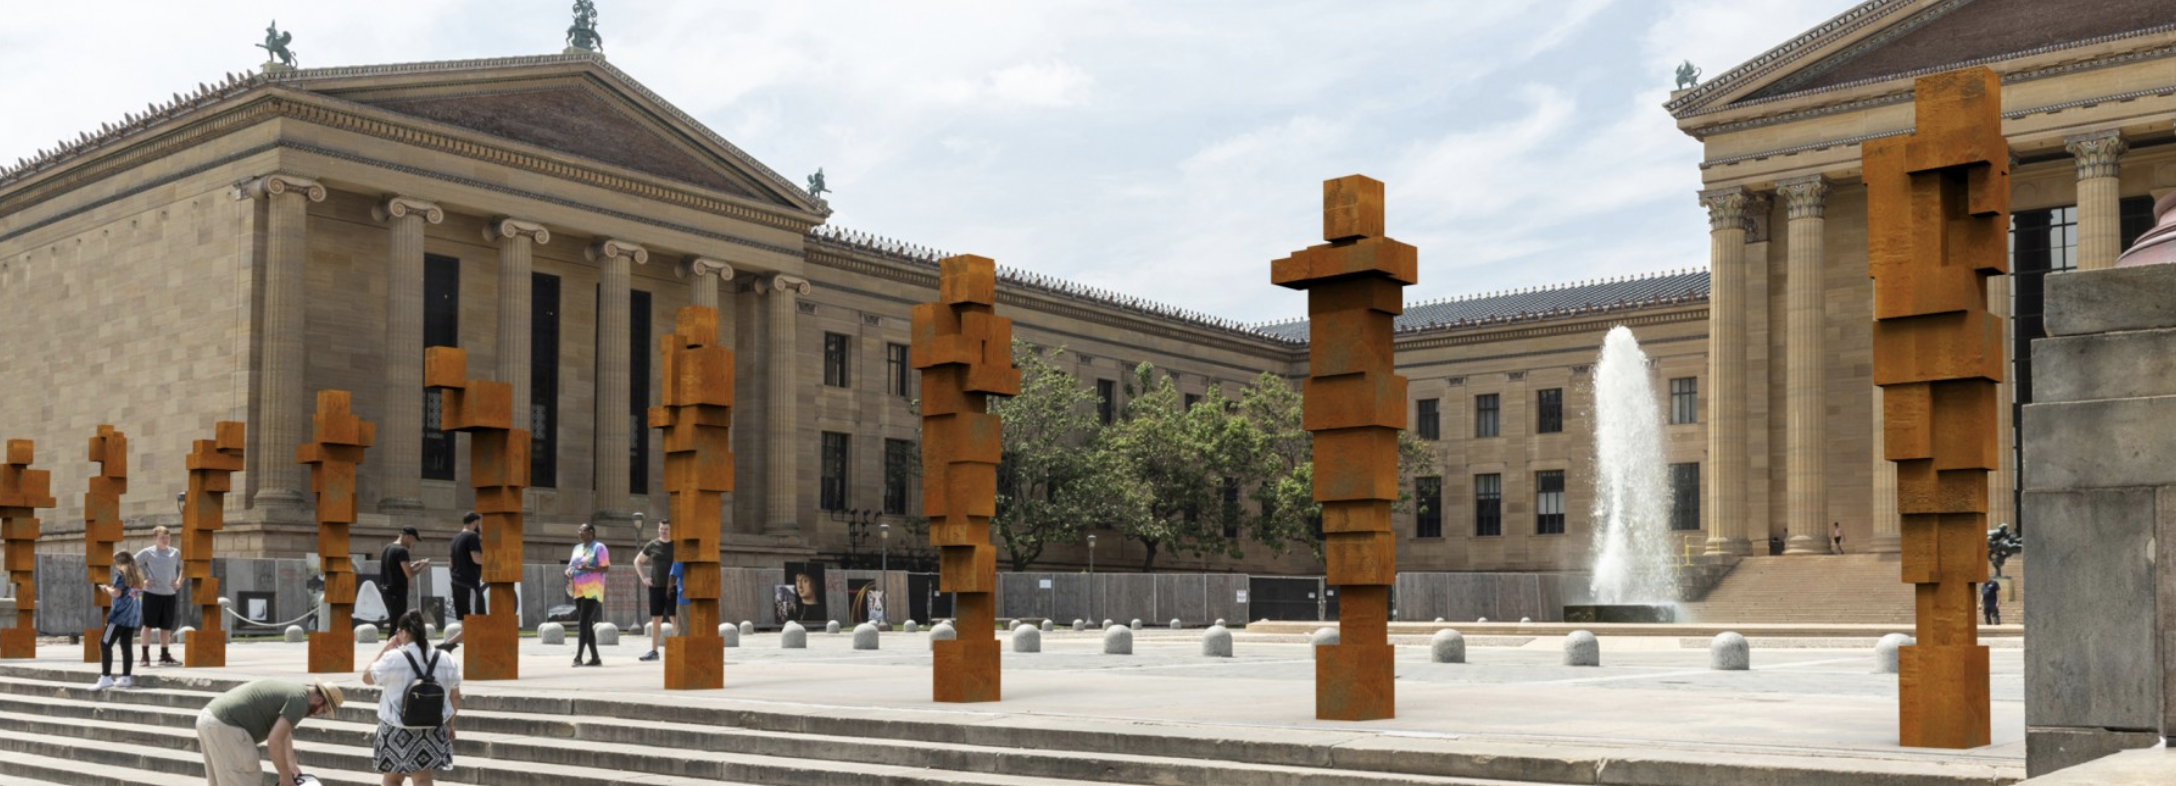 Antony Gormley sculptures to be installed at Philadelphia museum